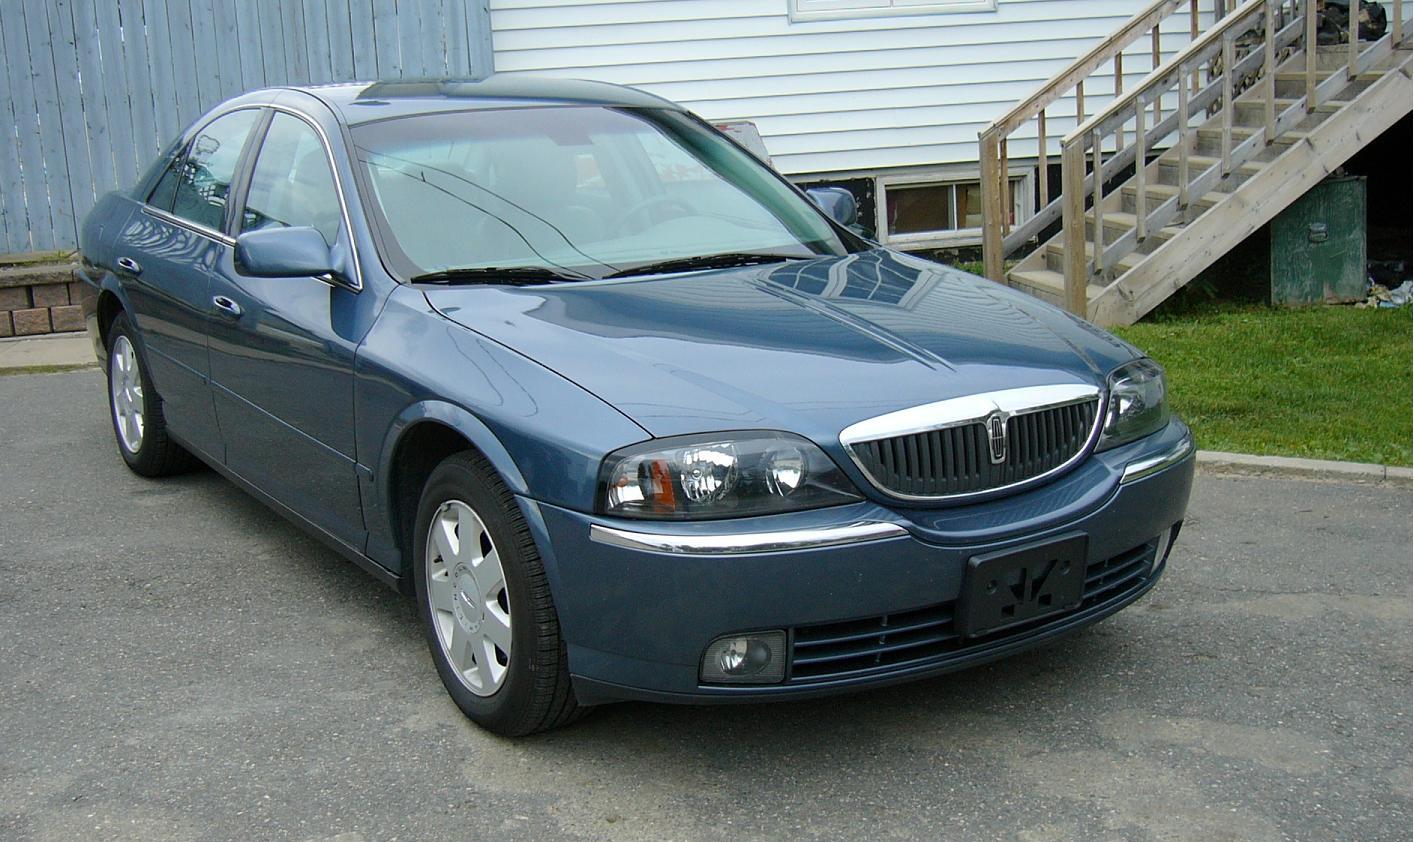  2005 Lincoln LS V6